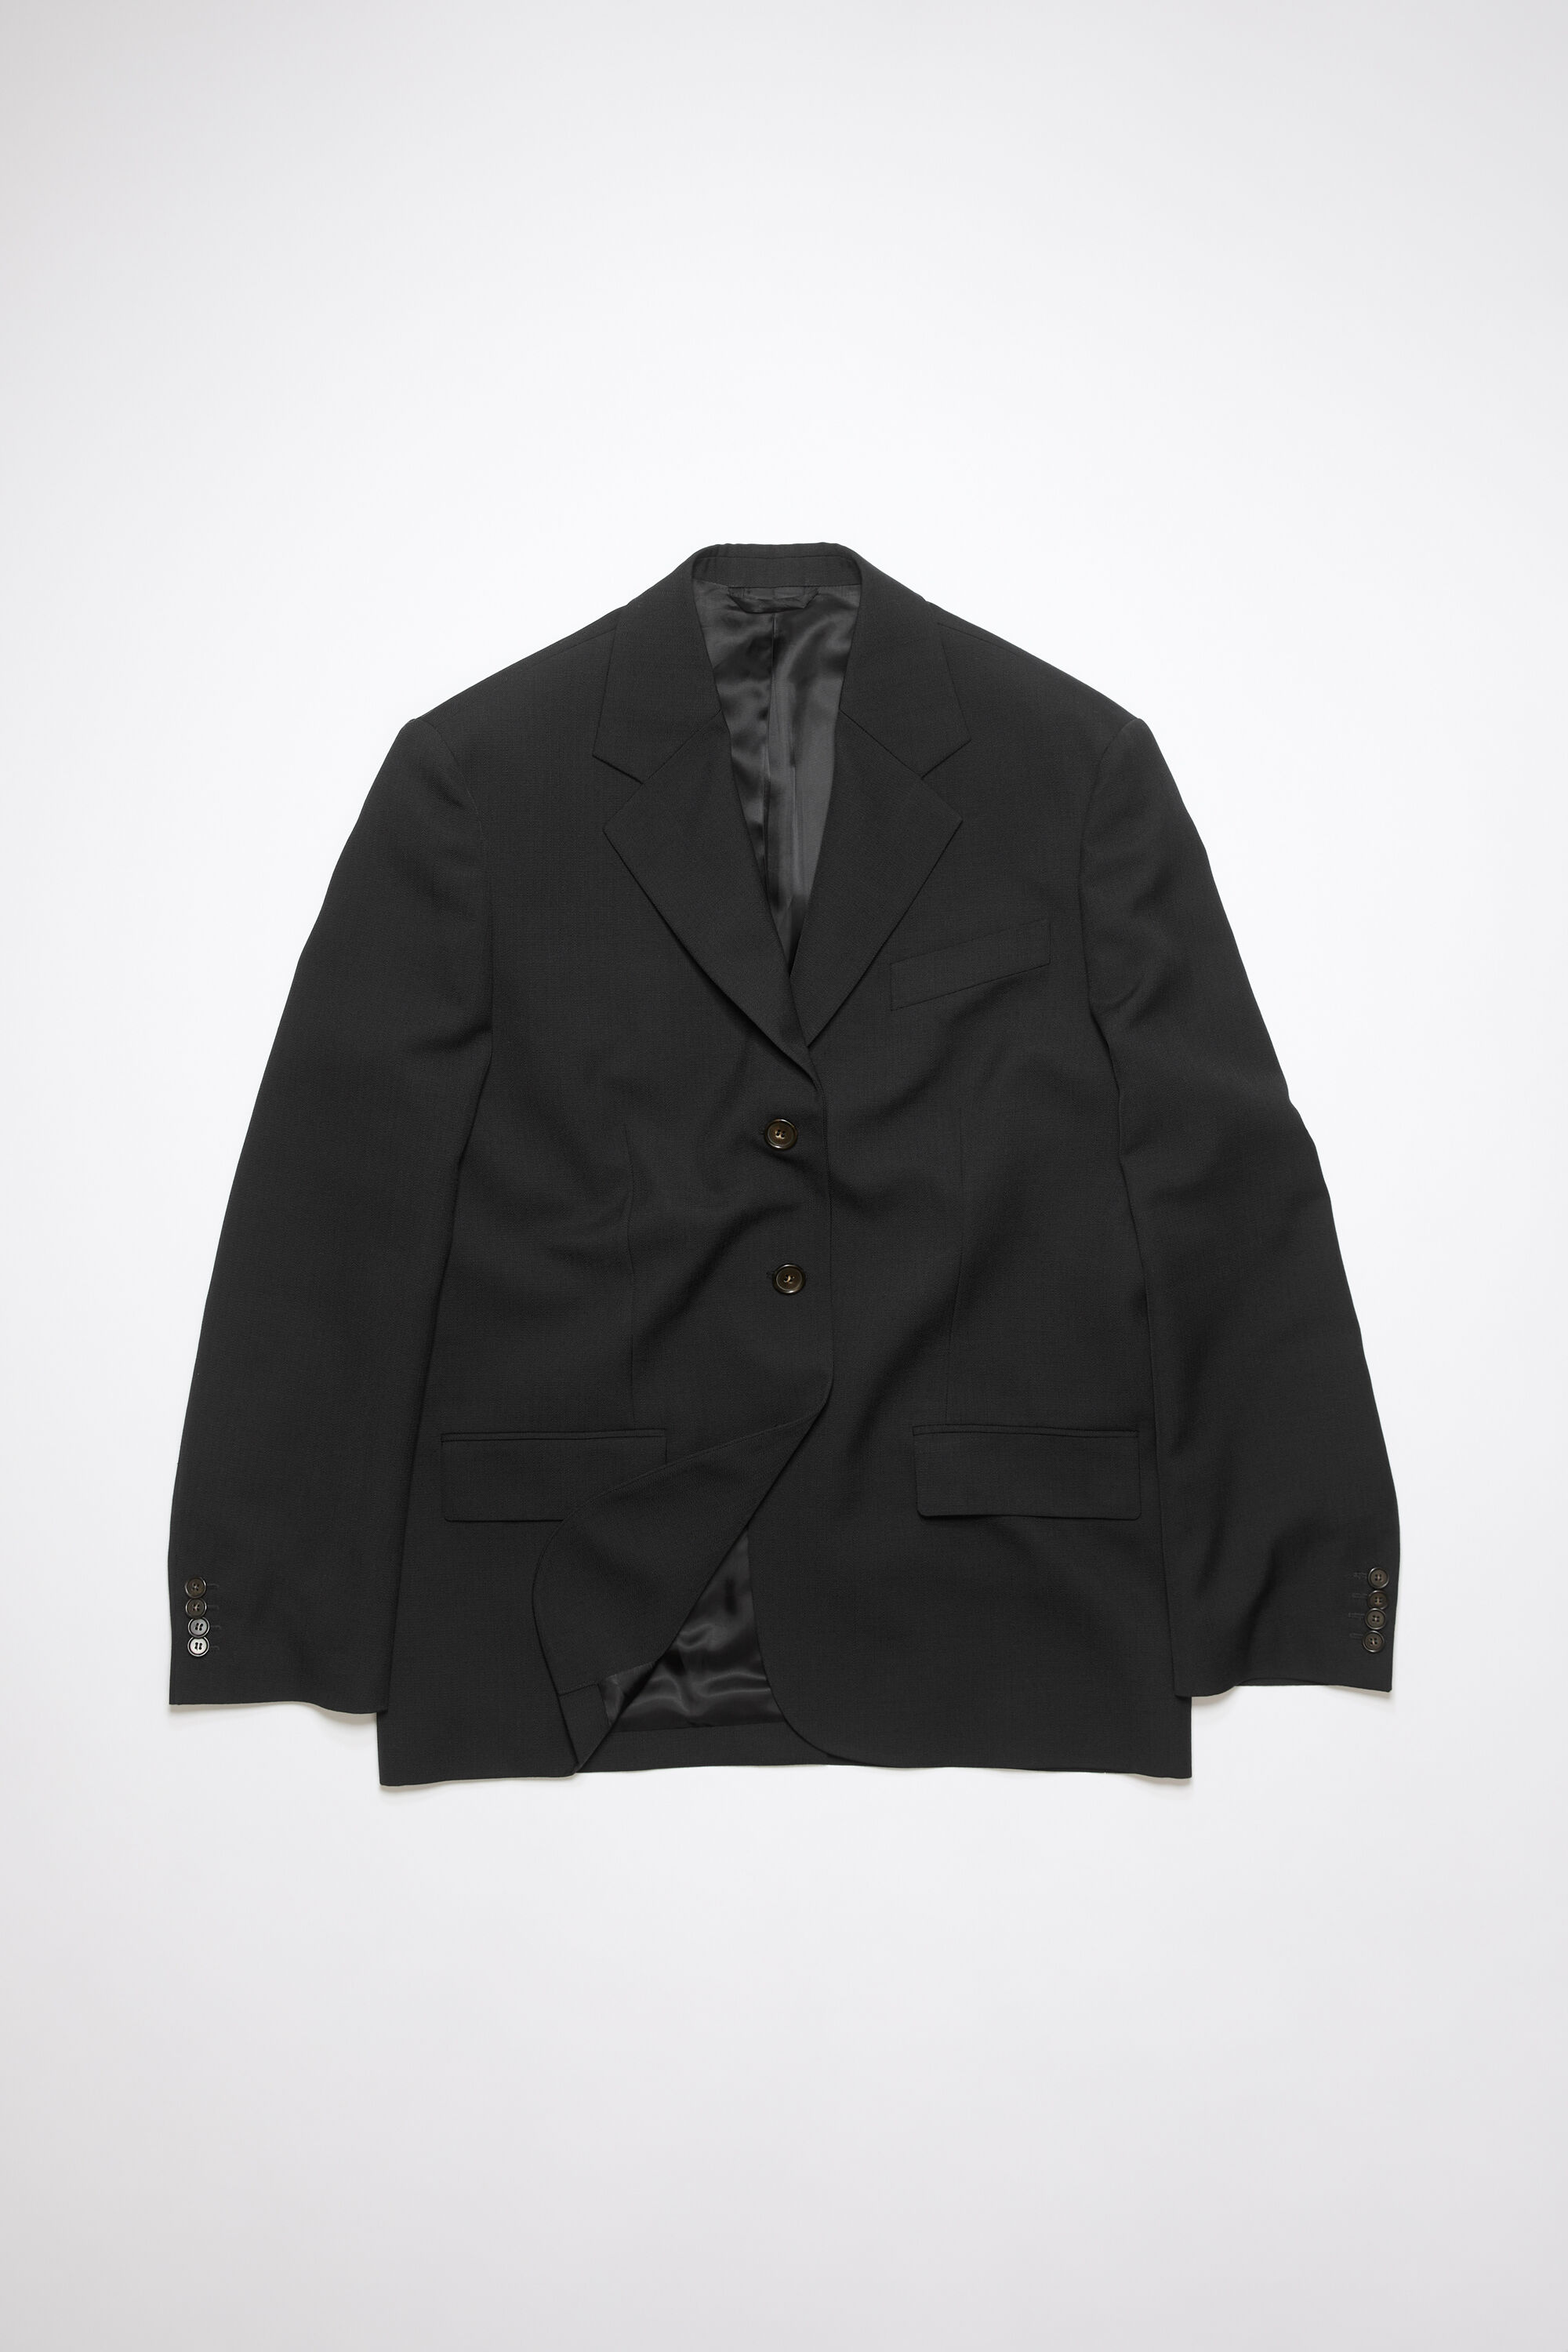 Acne Studios - シングルブレスト スーツジャケット - ブラック